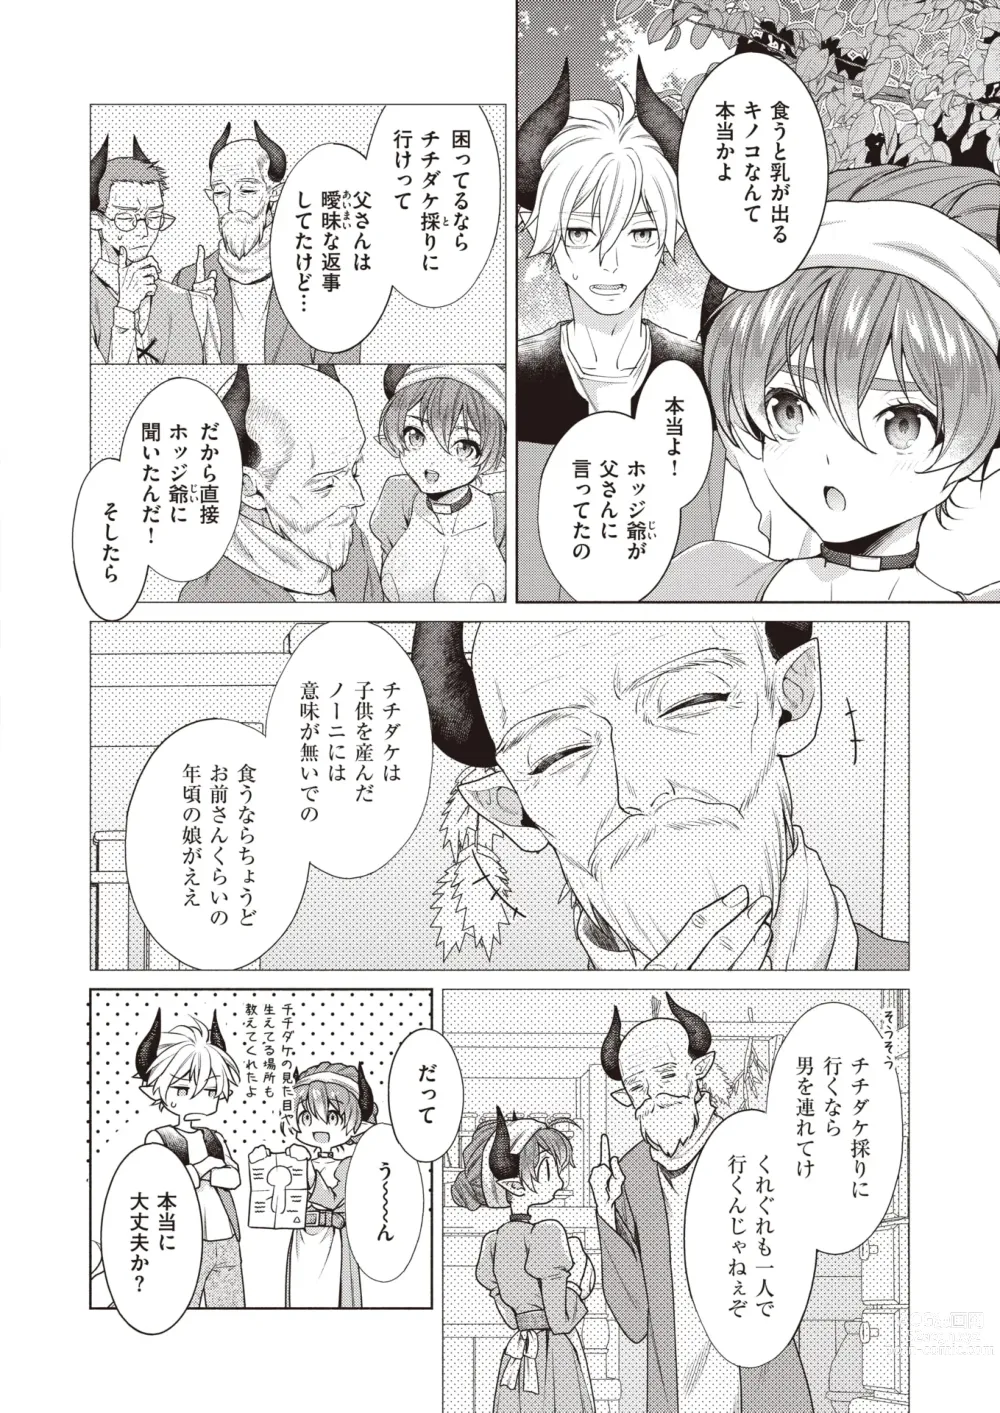 Page 3 of manga Isekai Rakuten Vol. 28